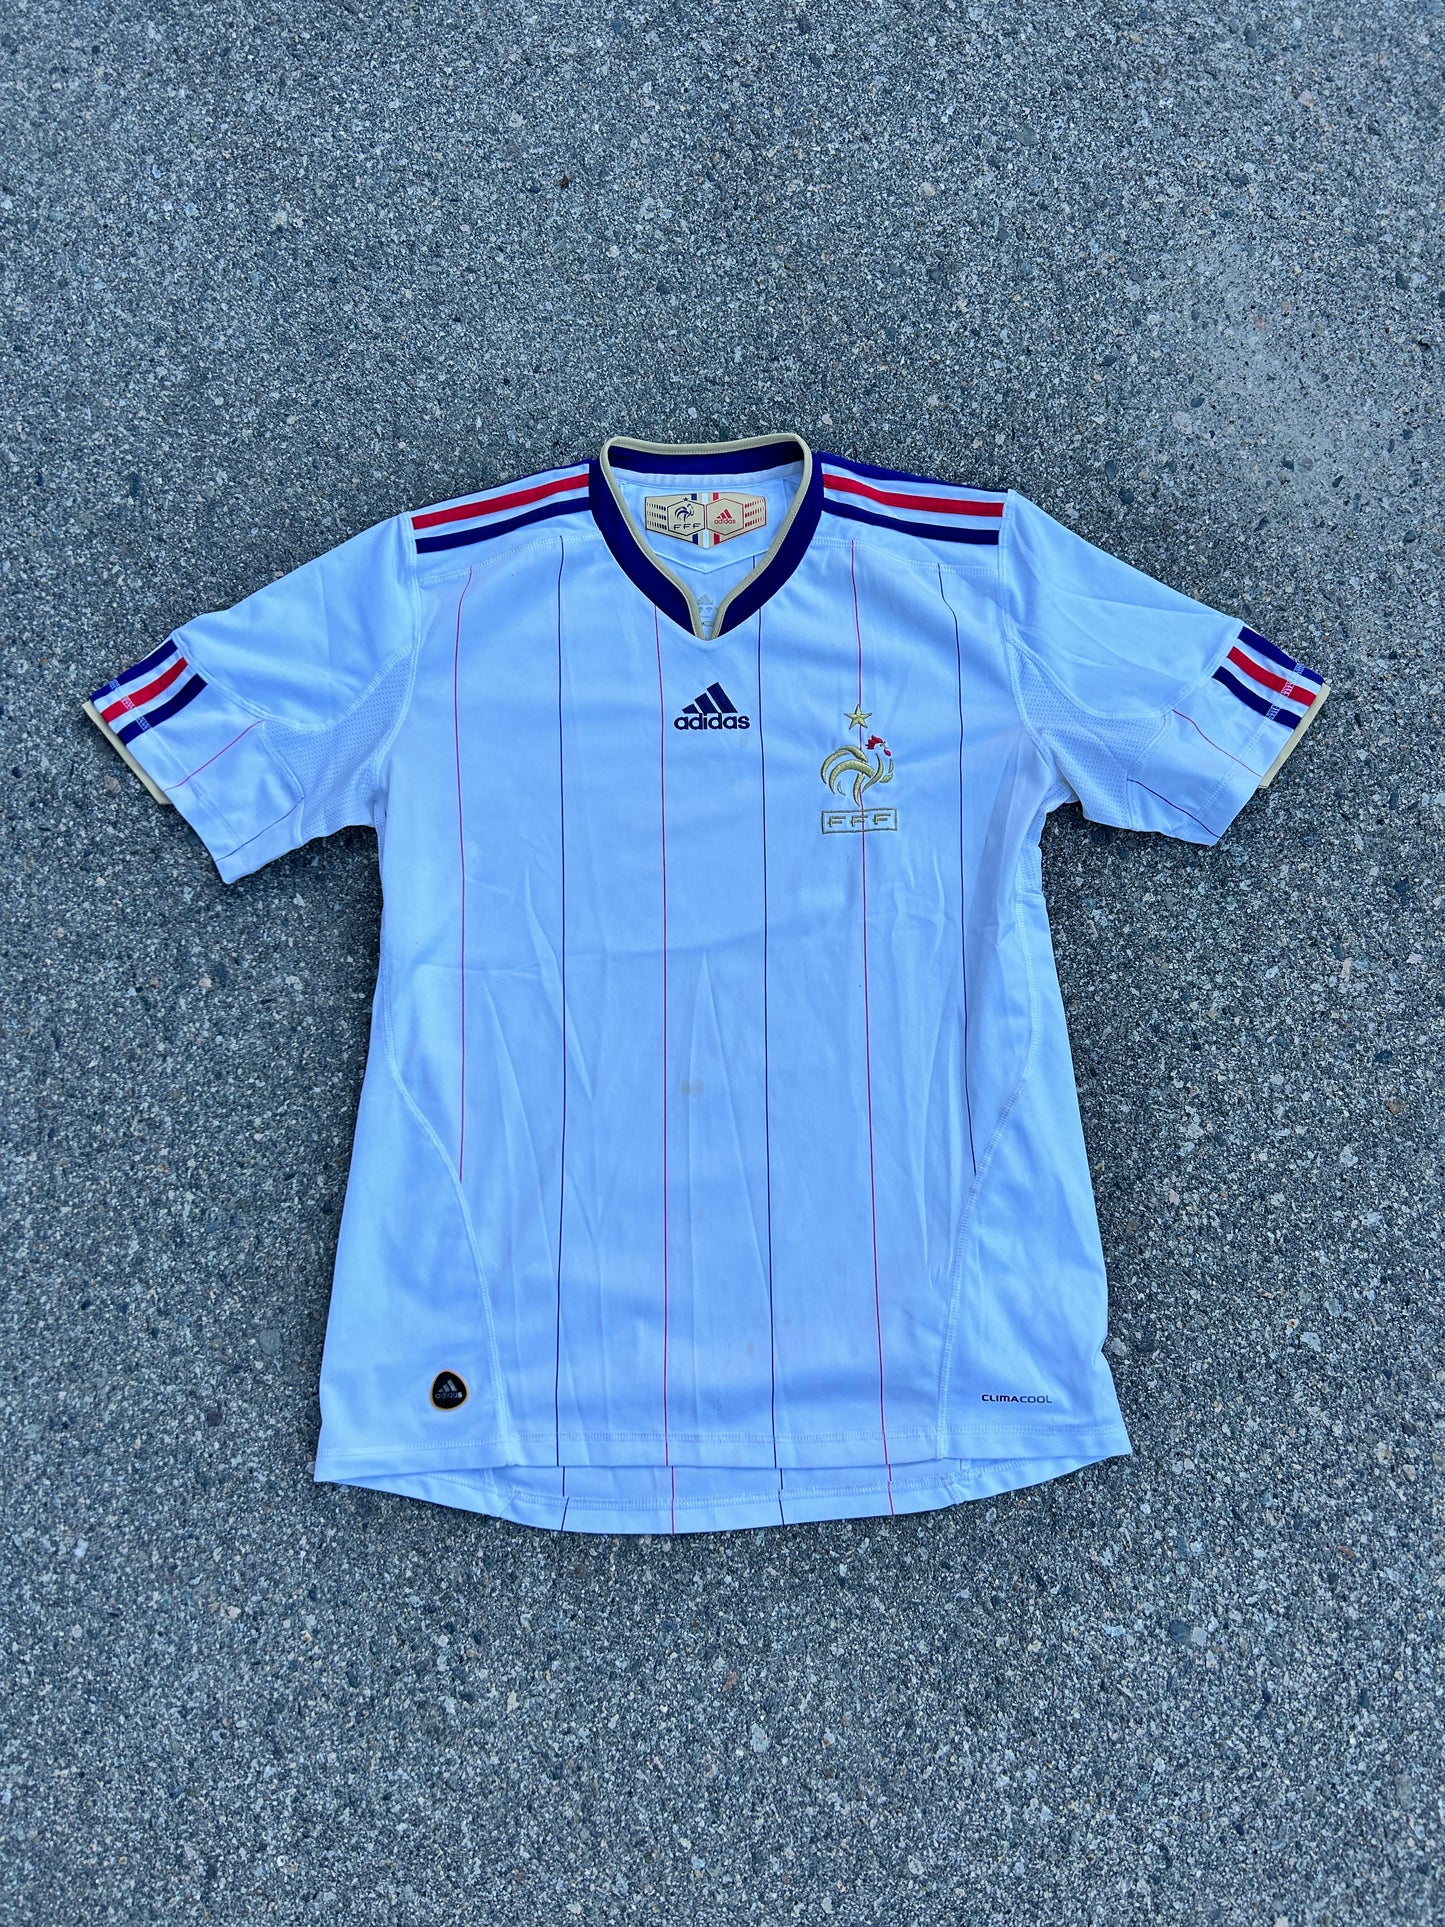 Adidas France Football Kit (M)